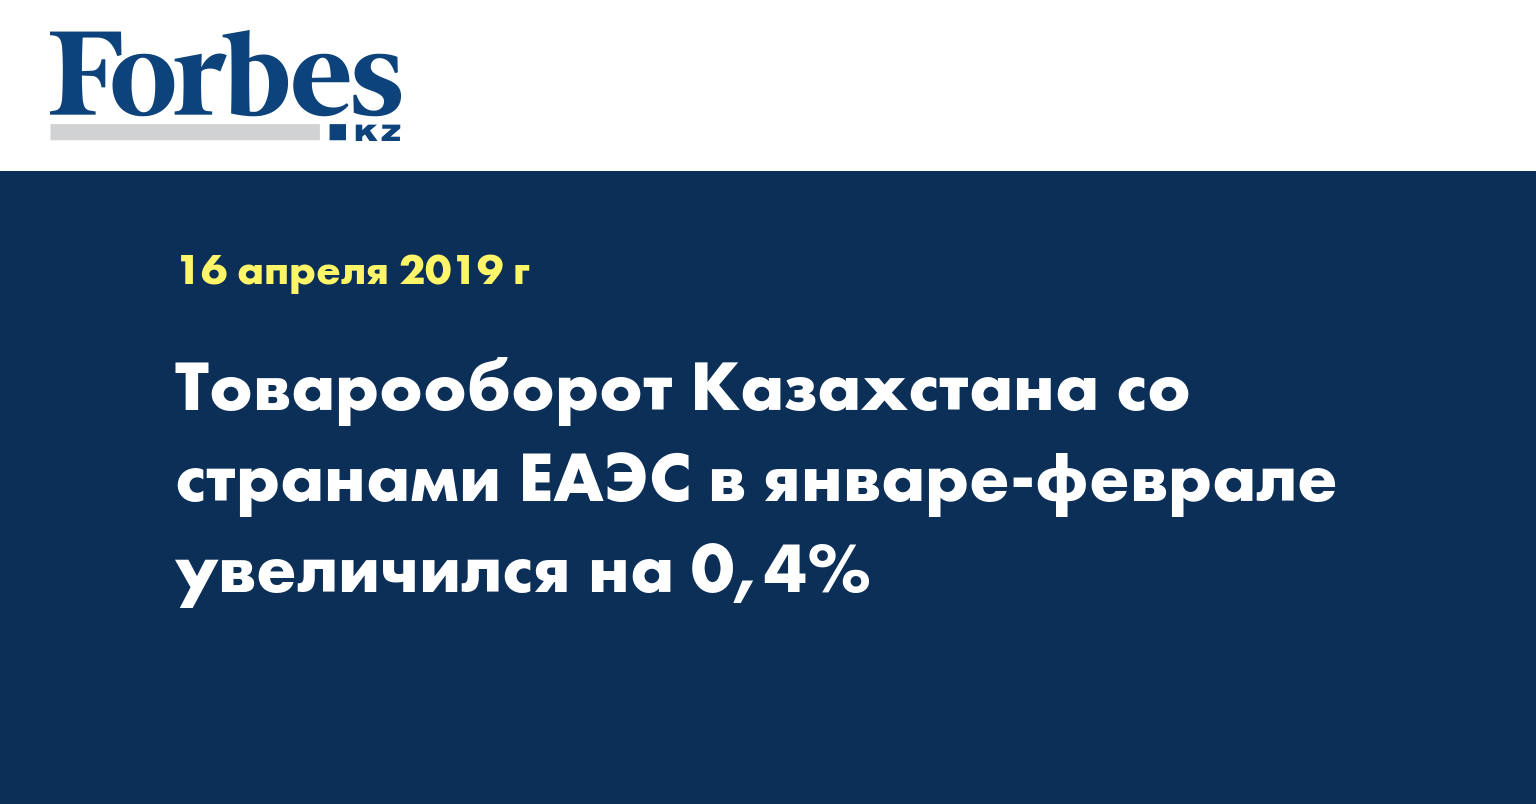 Товарооборот Казахстана со странами ЕАЭС в январе-феврале увеличился на 0,4%